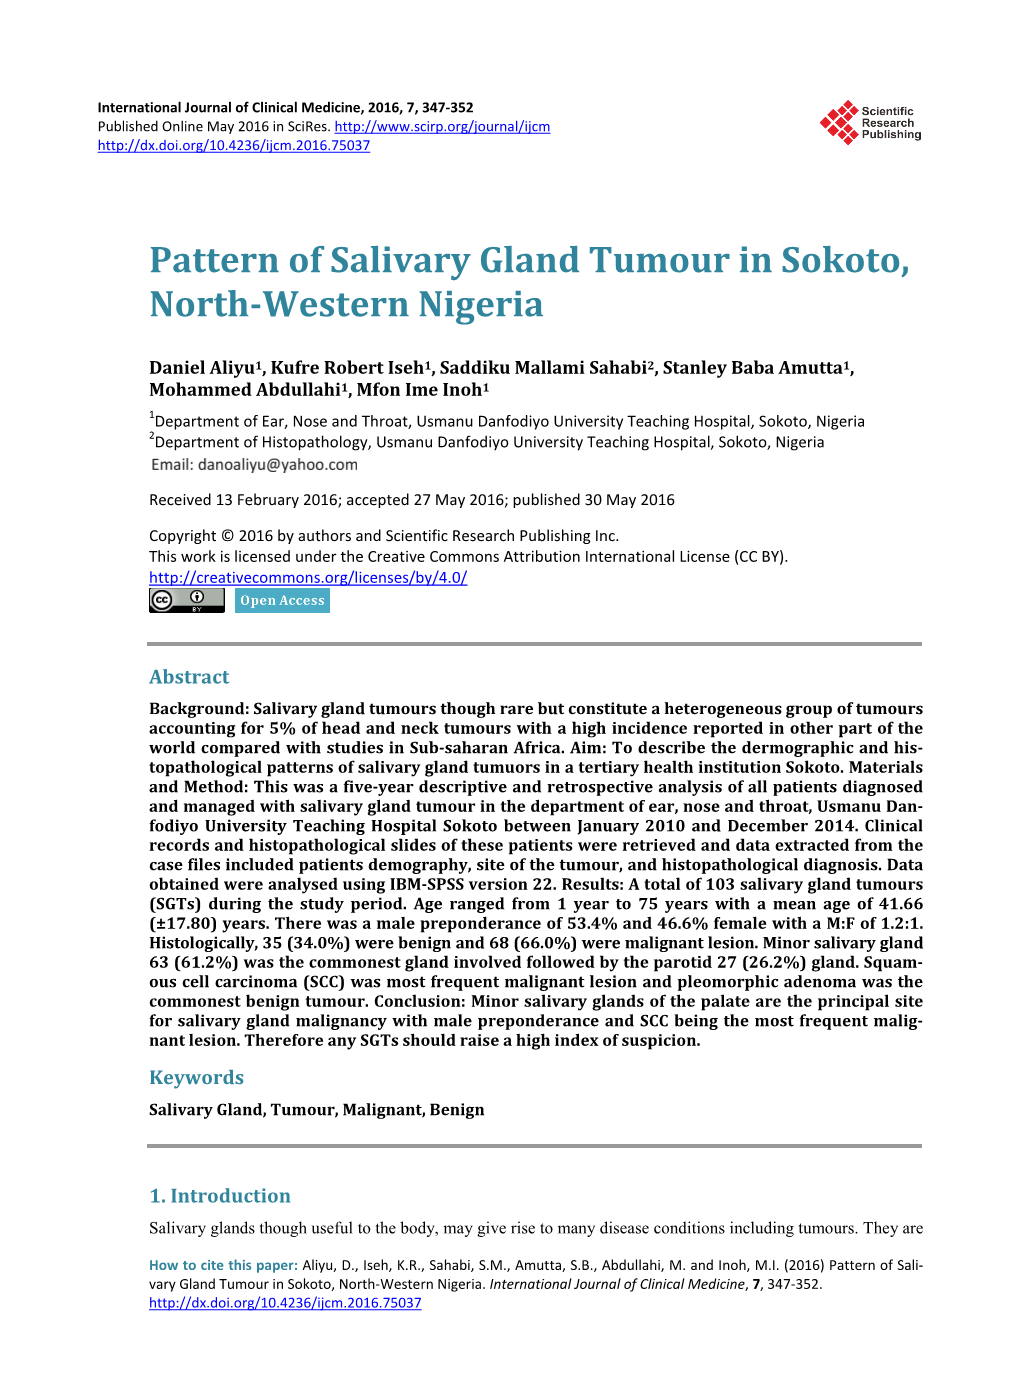 Pattern of Salivary Gland Tumour in Sokoto, North-Western Nigeria